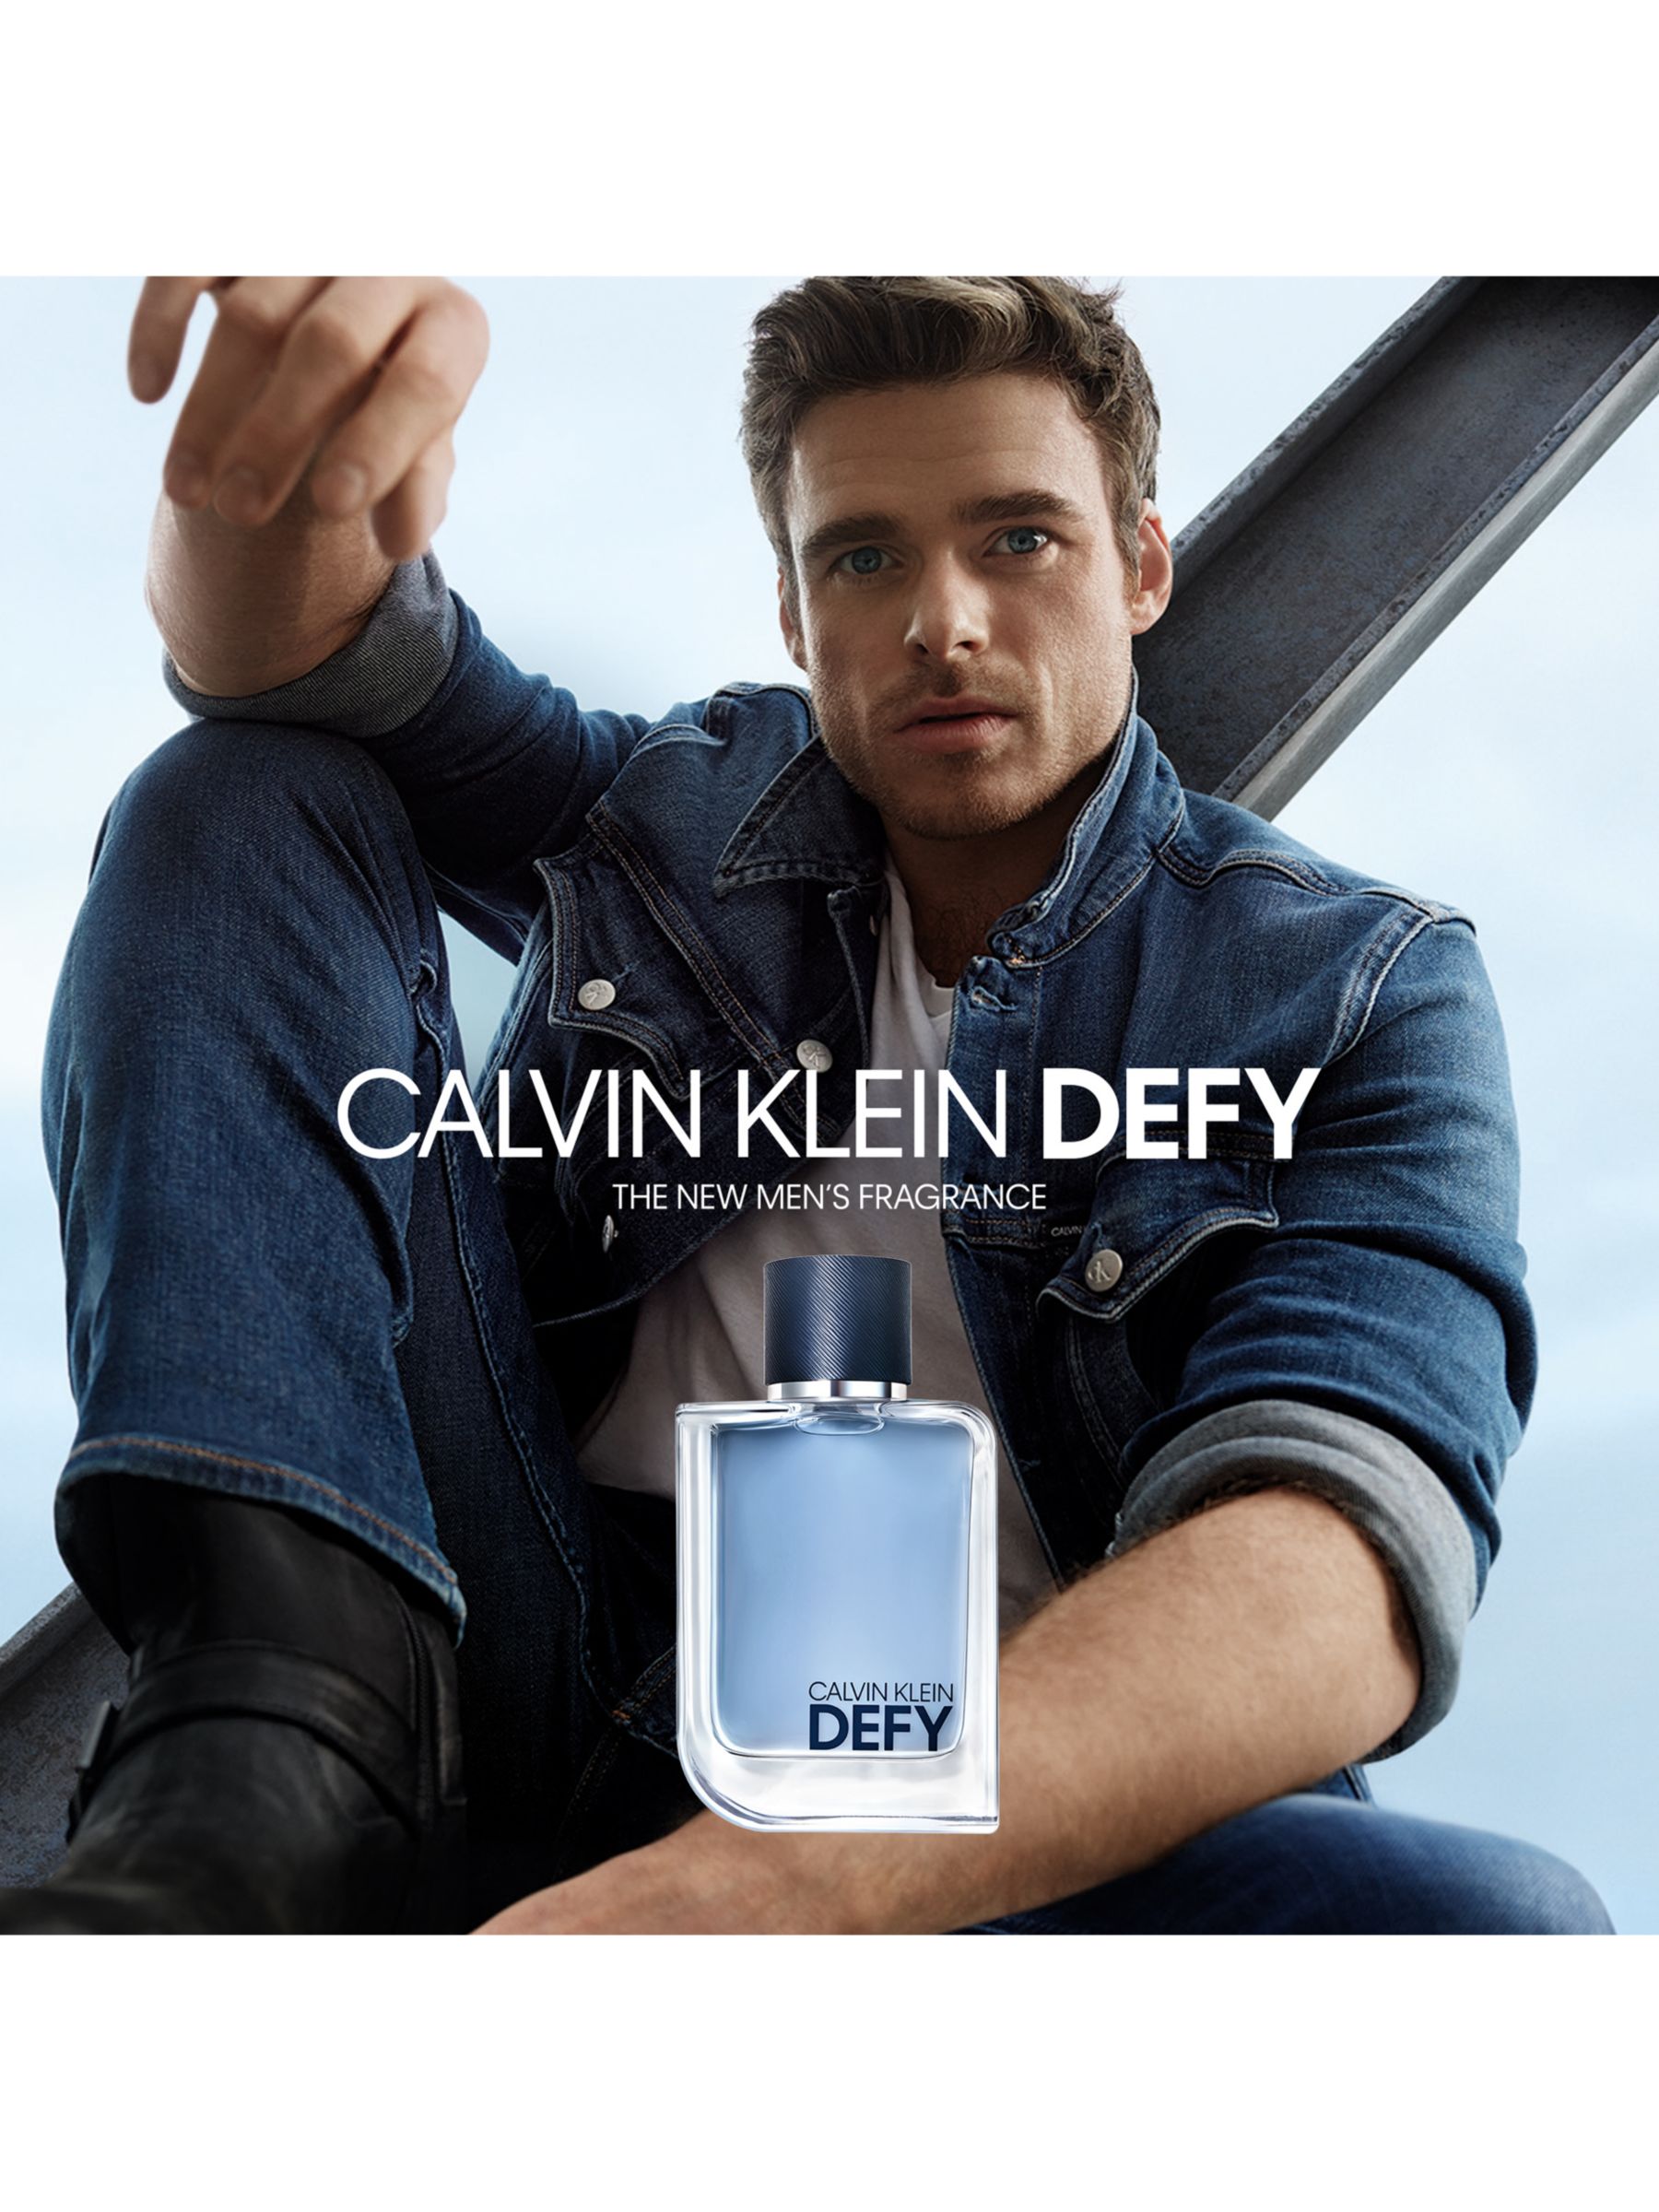 Calvin Klein Defy Eau de Toilette, 30ml